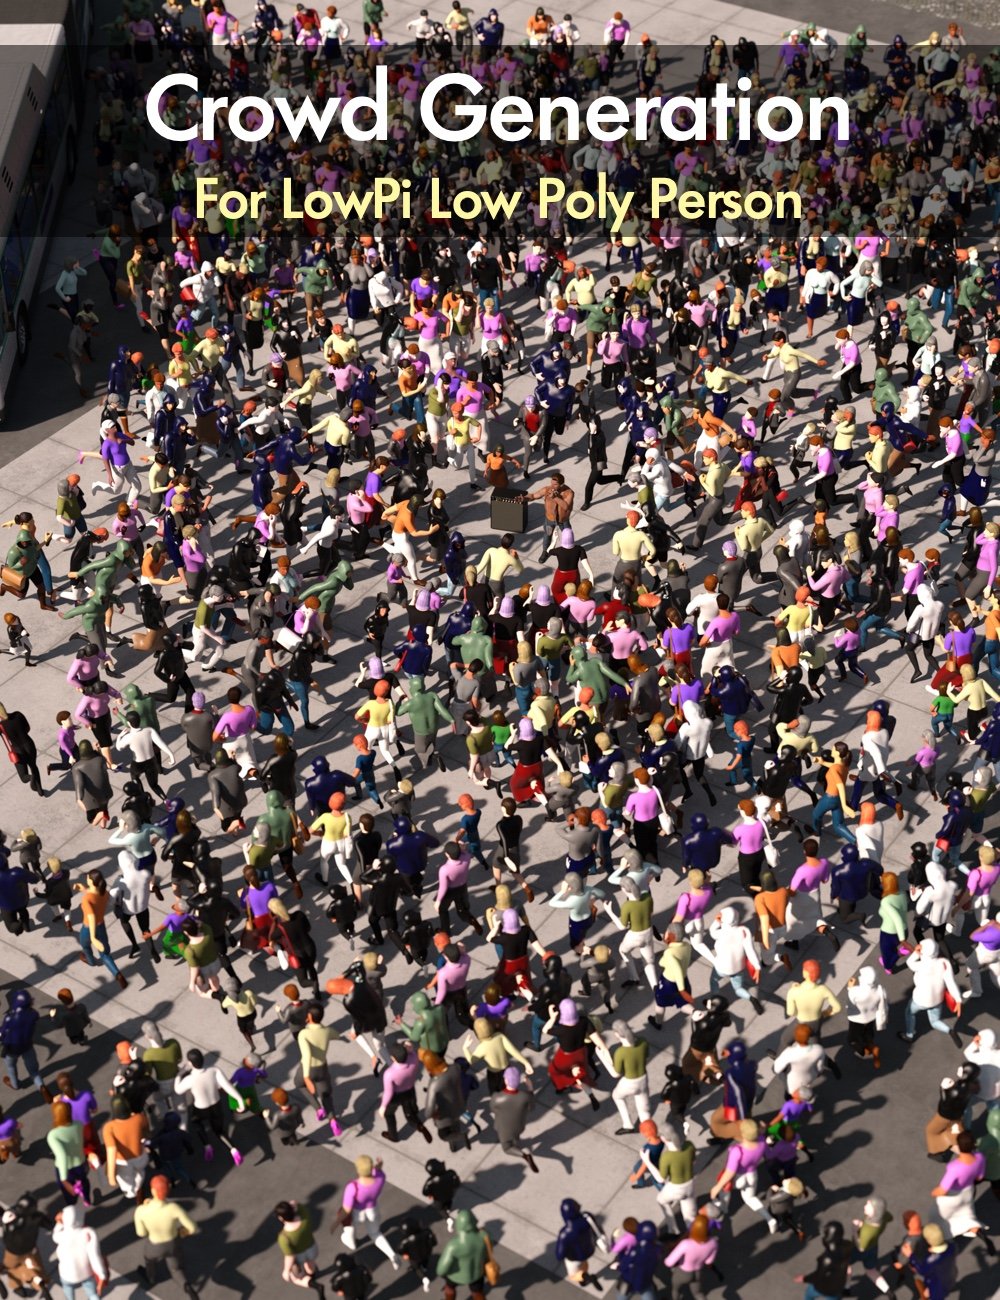 Crowd Generation For LM Lowpi Lowpoly Figure by: Code 66FeralFey, 3D Models by Daz 3D